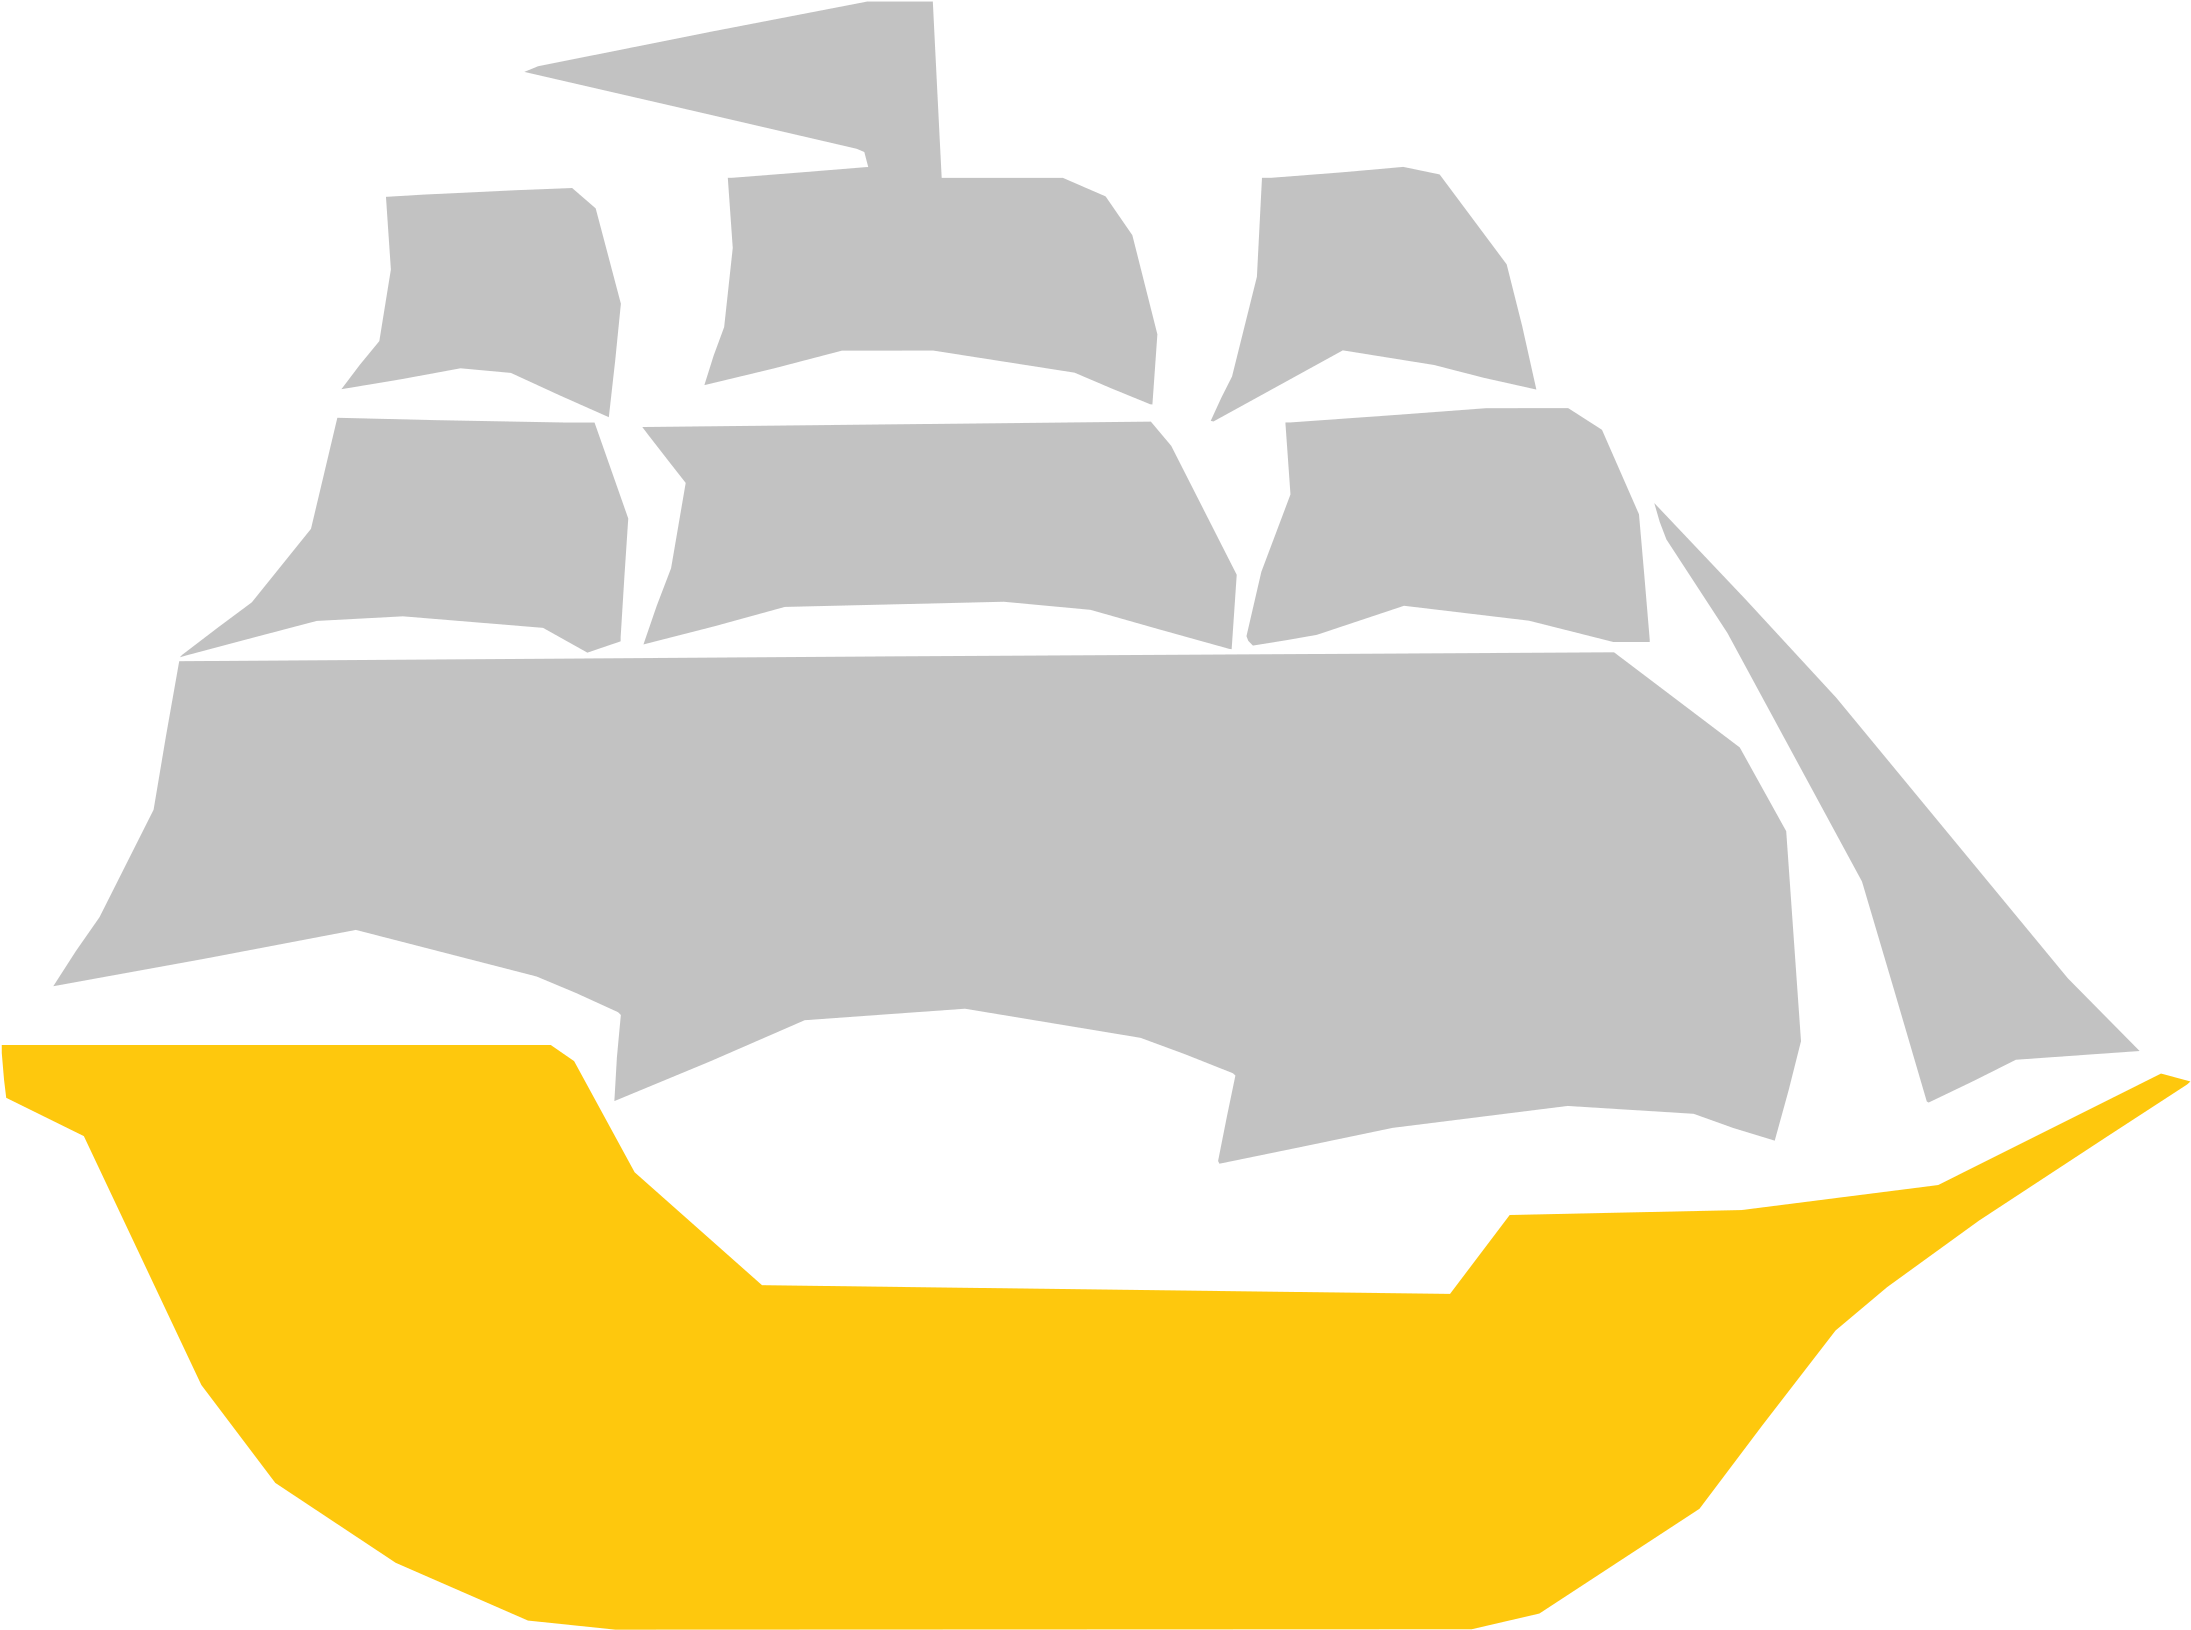 Pirate Ship Refixed - Pirate Ship Clipart (2400x1853)